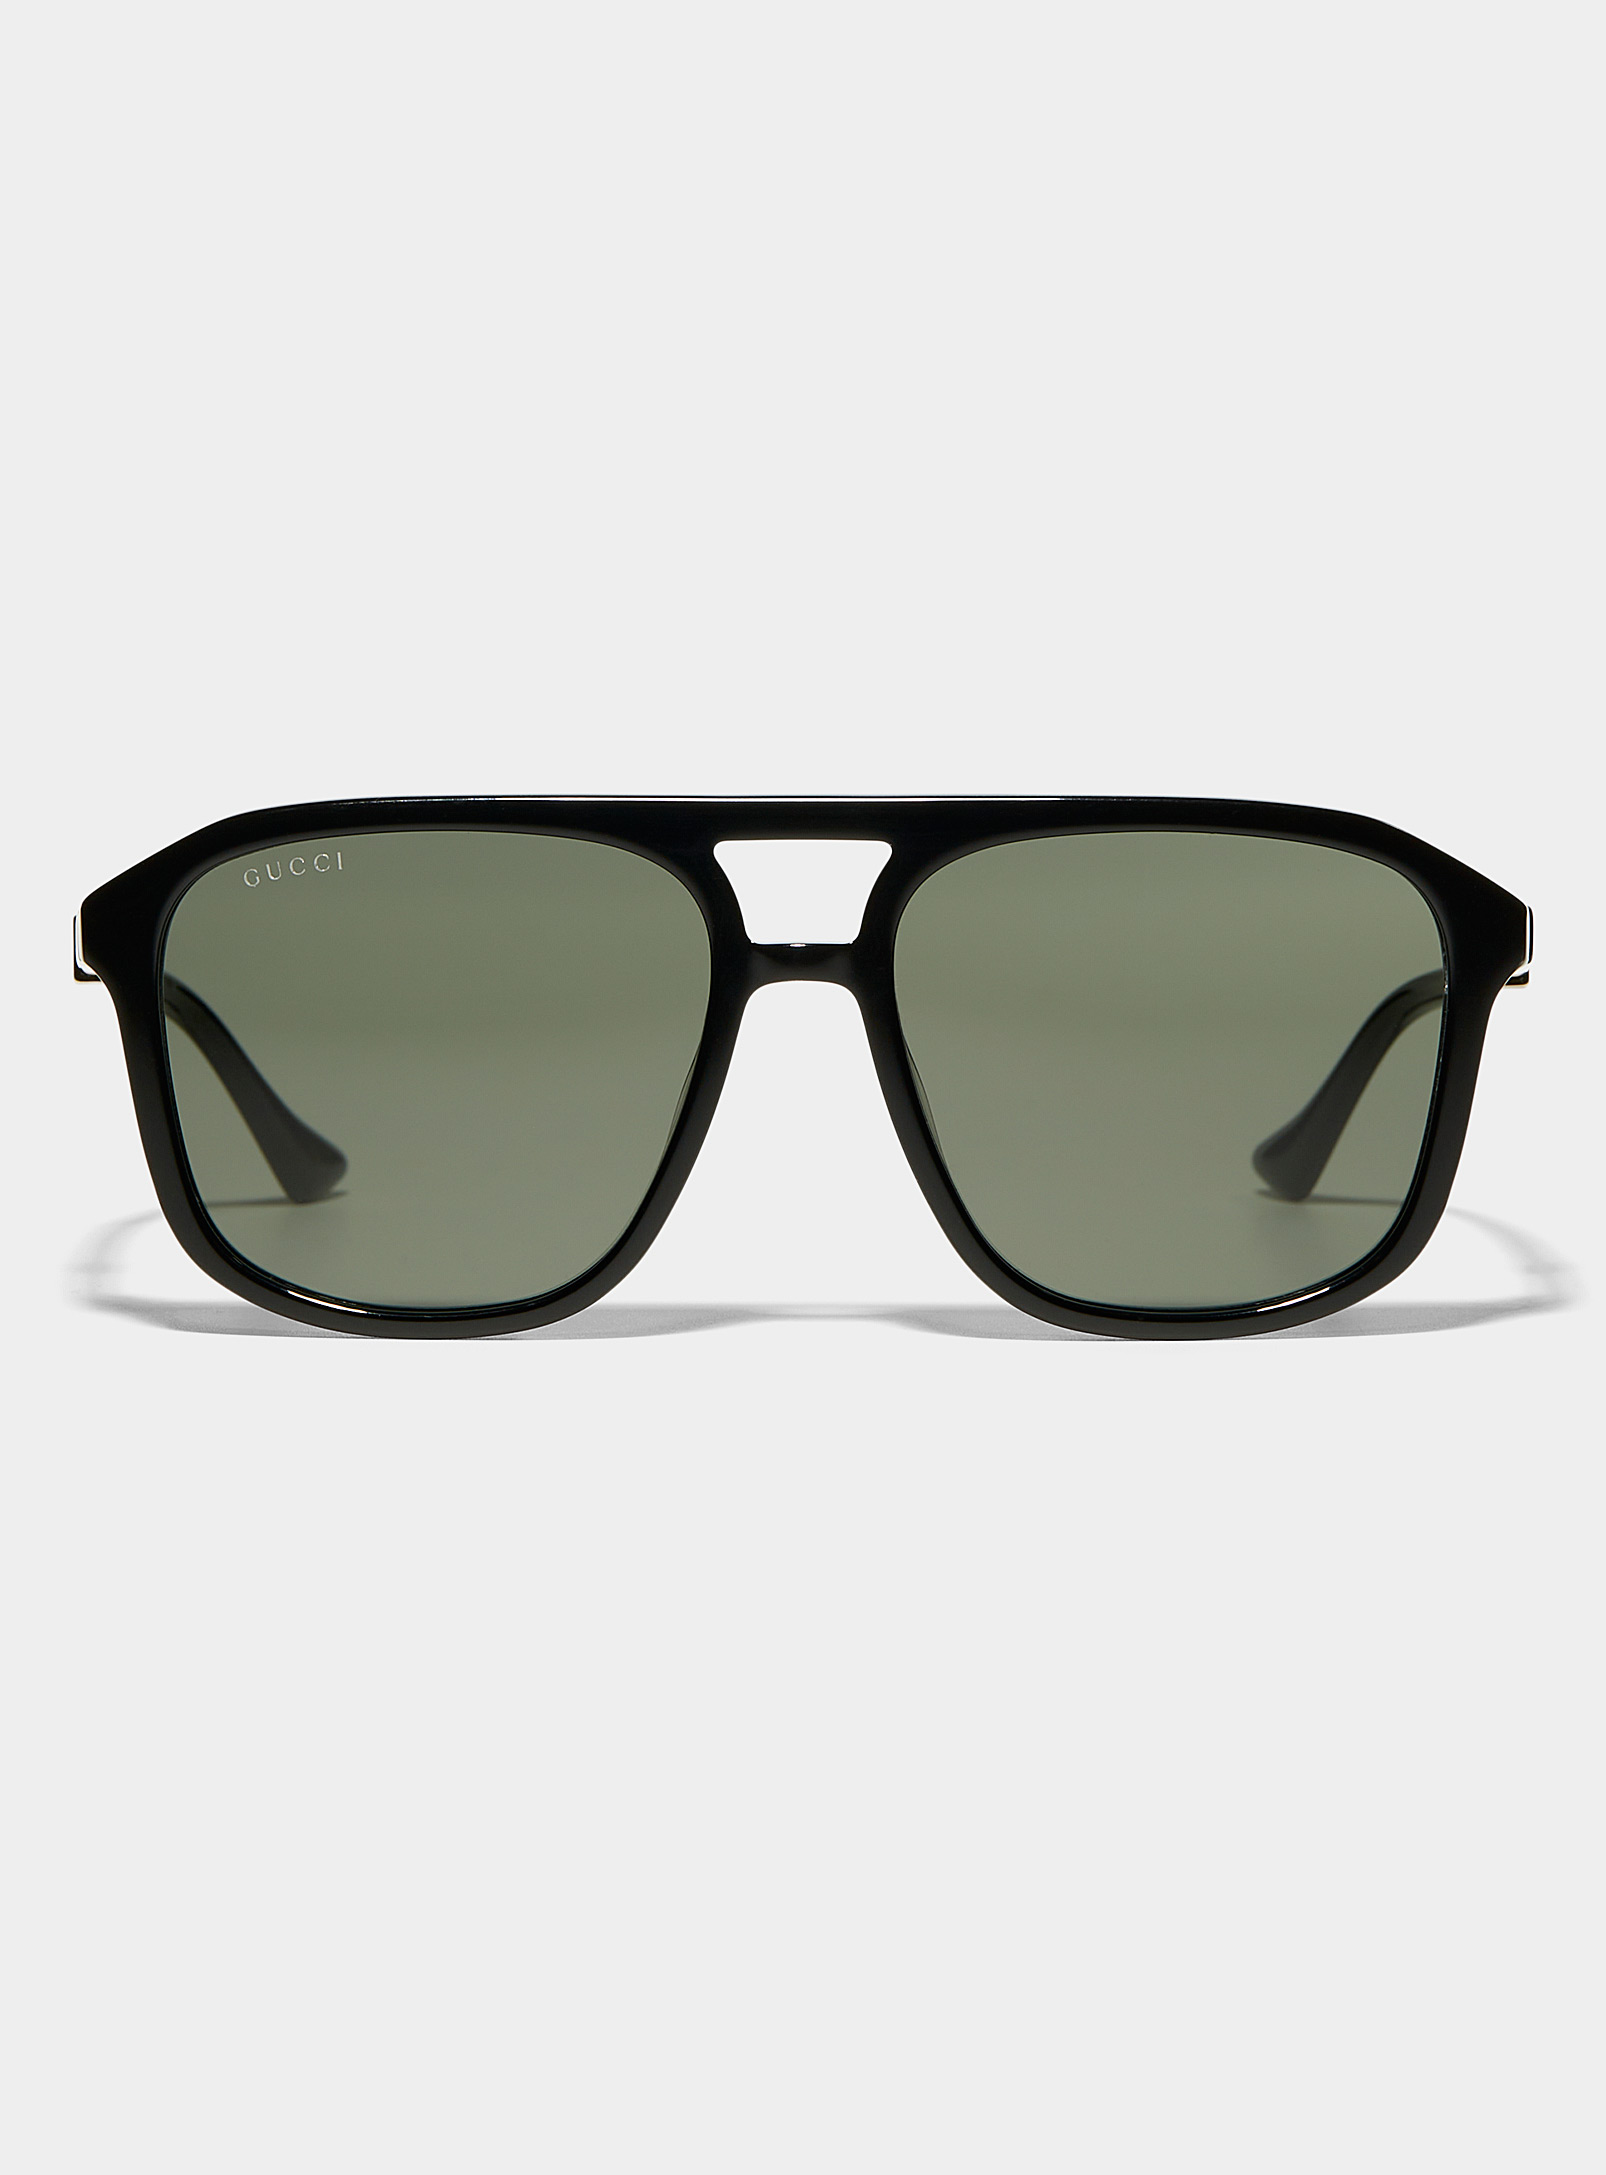 Gucci - Signature temples aviator sunglasses